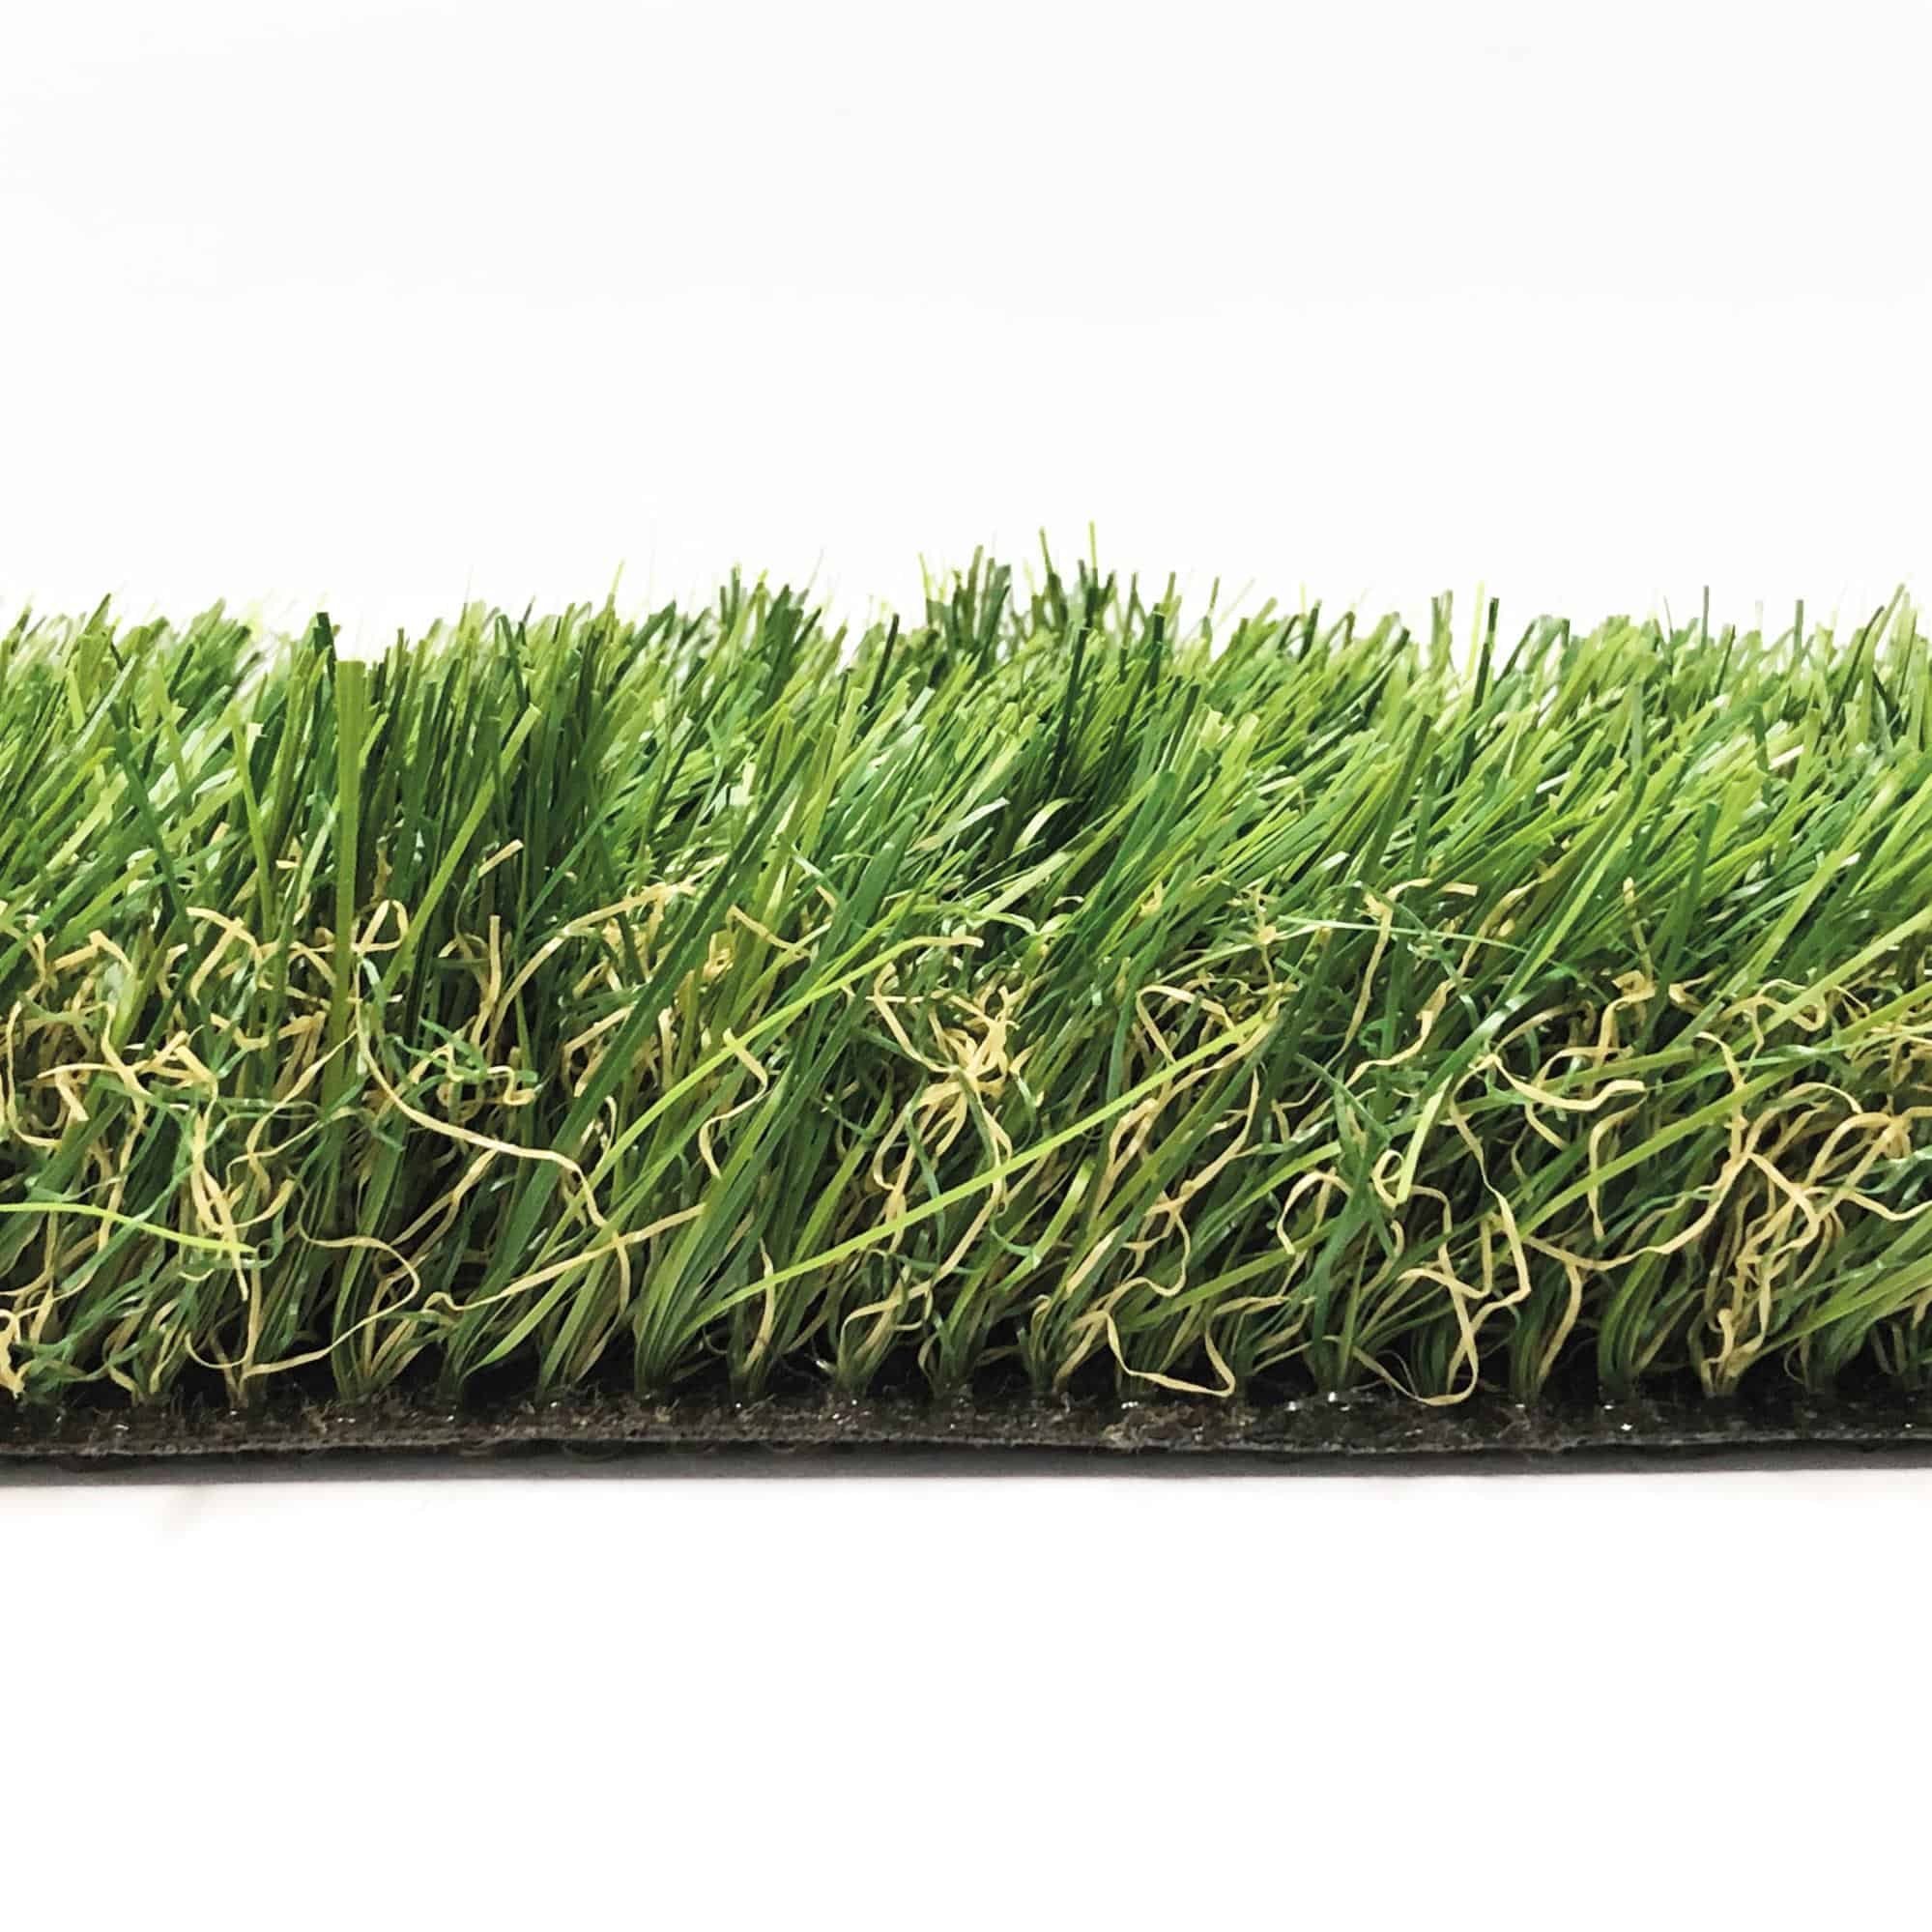 CORE Lawn Natural Artificial Grass 4m Wide Roll 7 m